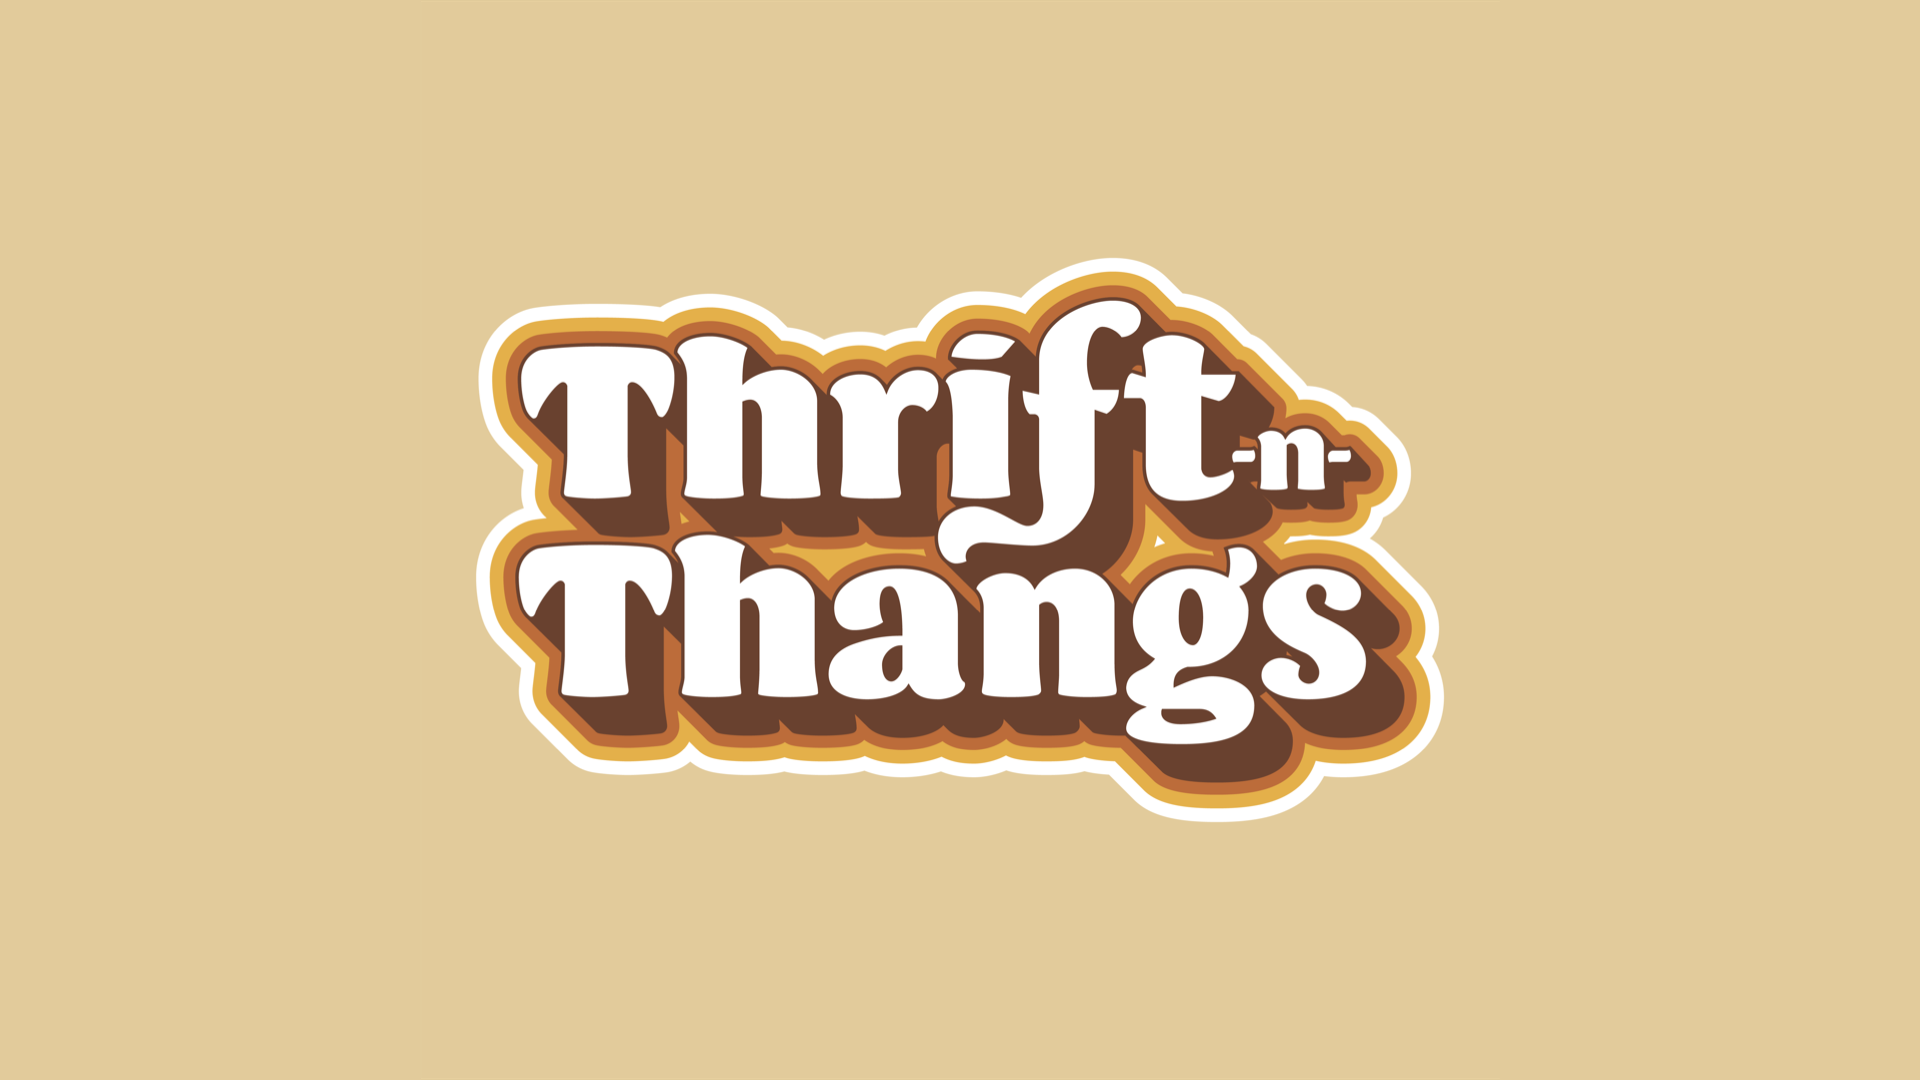 THRIFT-N-THANGS